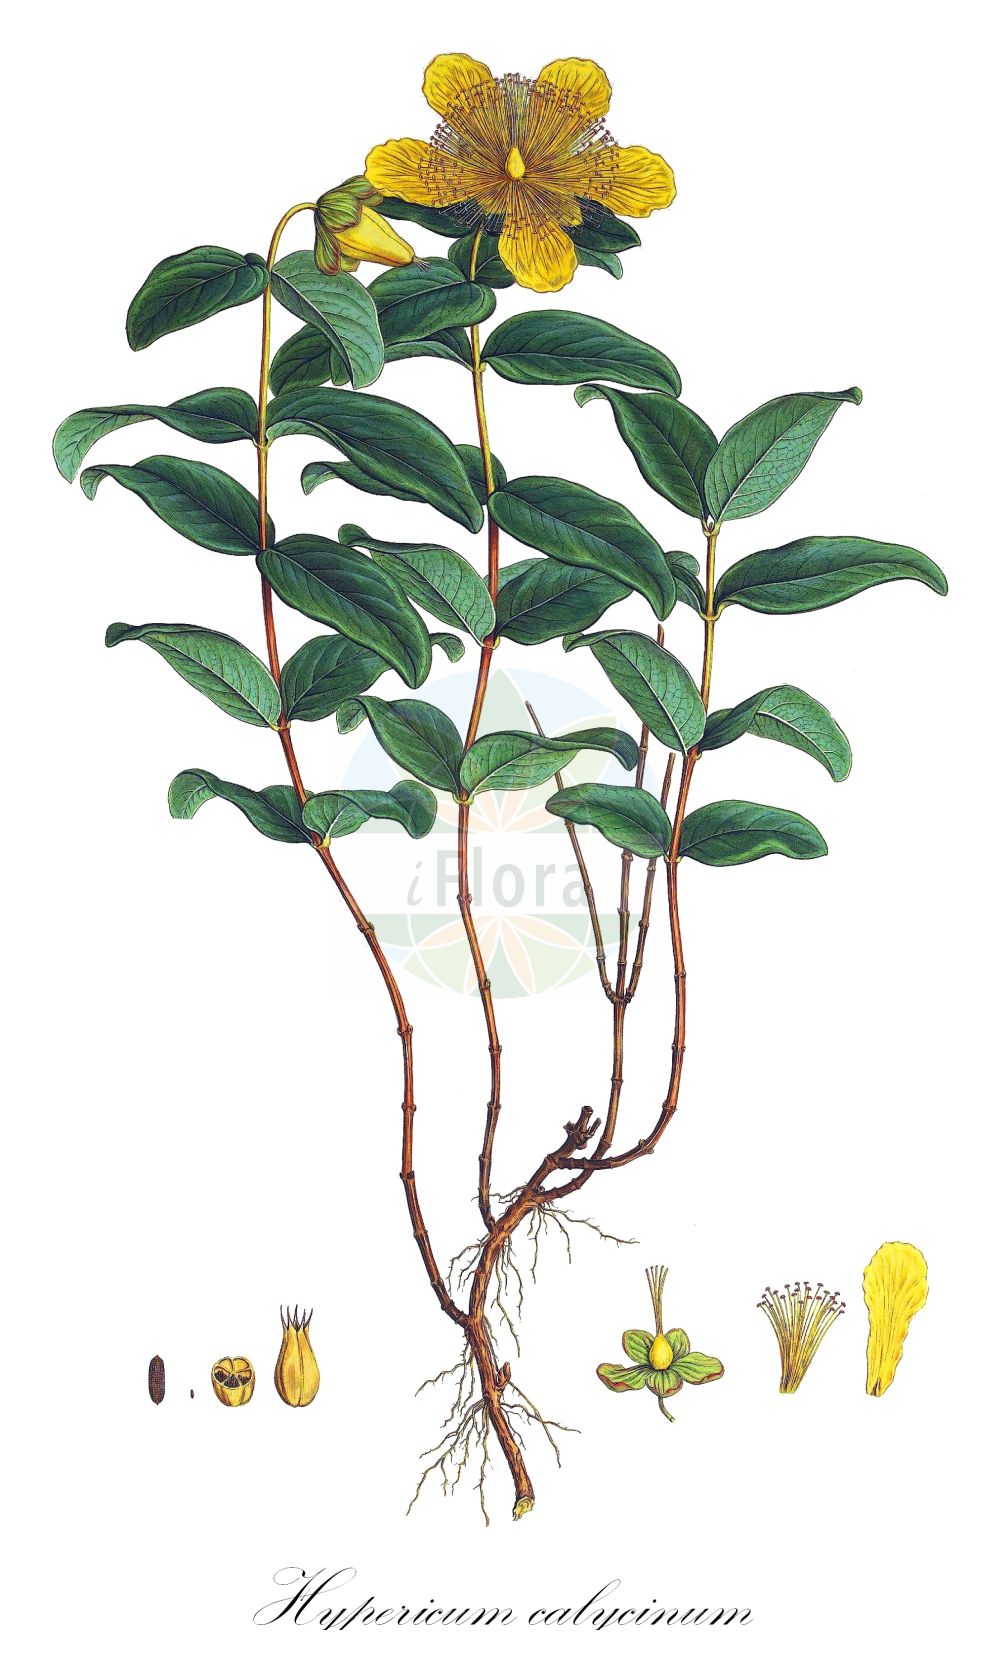 Historische Abbildung von Hypericum calycinum (Rose-of-Sharon). Das Bild zeigt Blatt, Bluete, Frucht und Same. ---- Historical Drawing of Hypericum calycinum (Rose-of-Sharon). The image is showing leaf, flower, fruit and seed.(Hypericum calycinum,Rose-of-Sharon,Hypericum calycinum,Hypericum grandiflorum,Hypericum,Johanniskraut,St. John's Wort,Hypericaceae,Hartheugewächse,St. John's Wort family,Blatt,Bluete,Frucht,Same,leaf,flower,fruit,seed,Sibthorp & Smith (1806-1840))